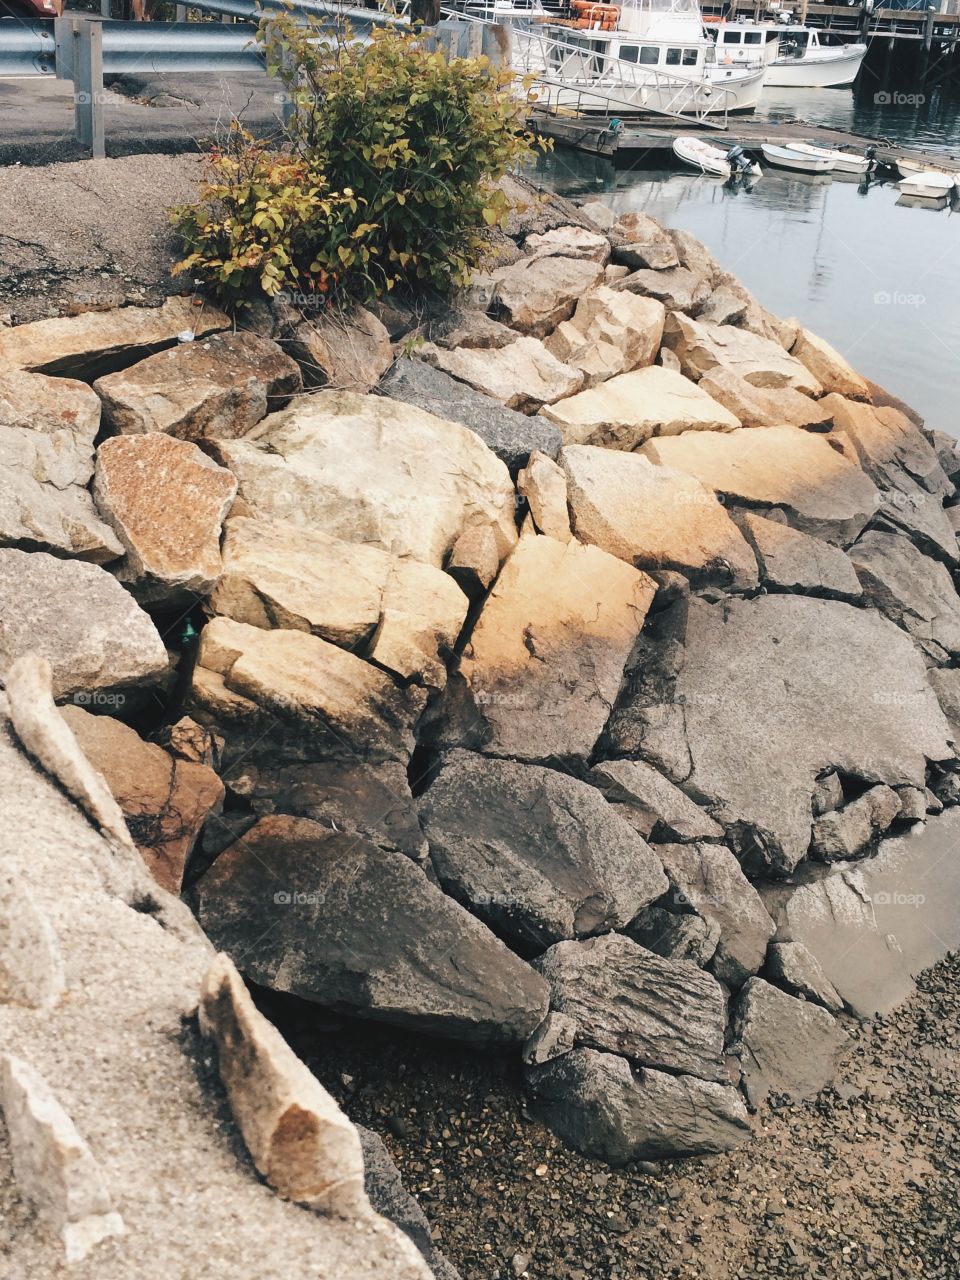 Rocks
Plymouth, MA